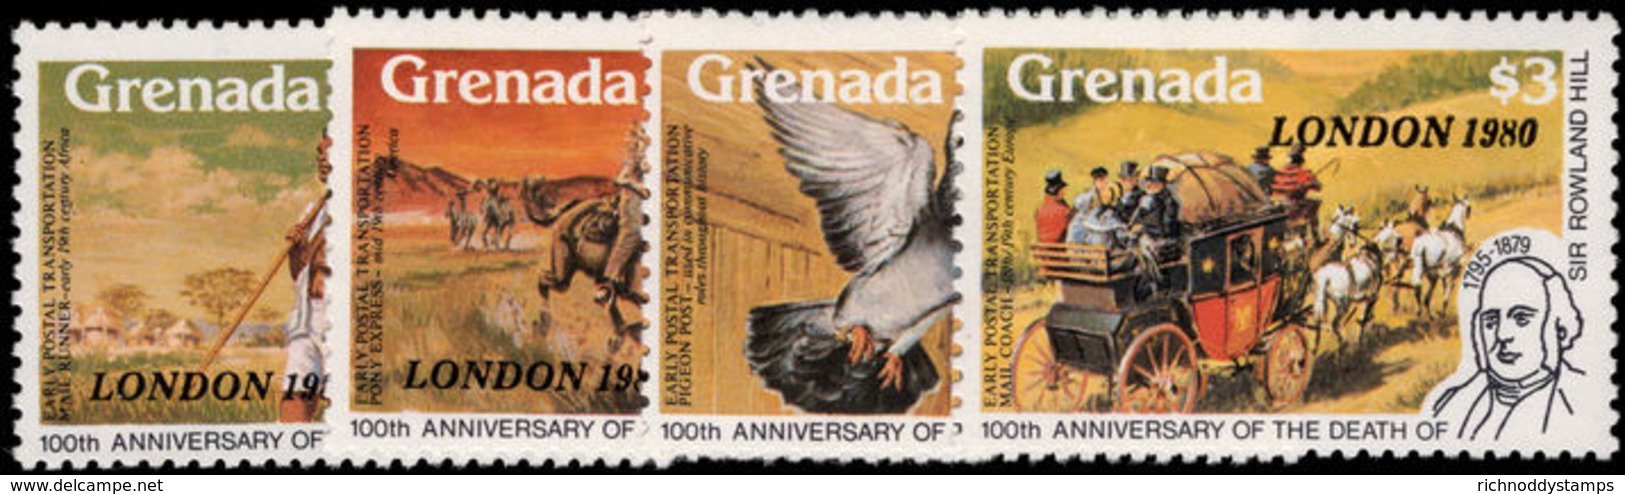 Grenada 1980 London 1980 Unmounted Mint. - Grenada (1974-...)